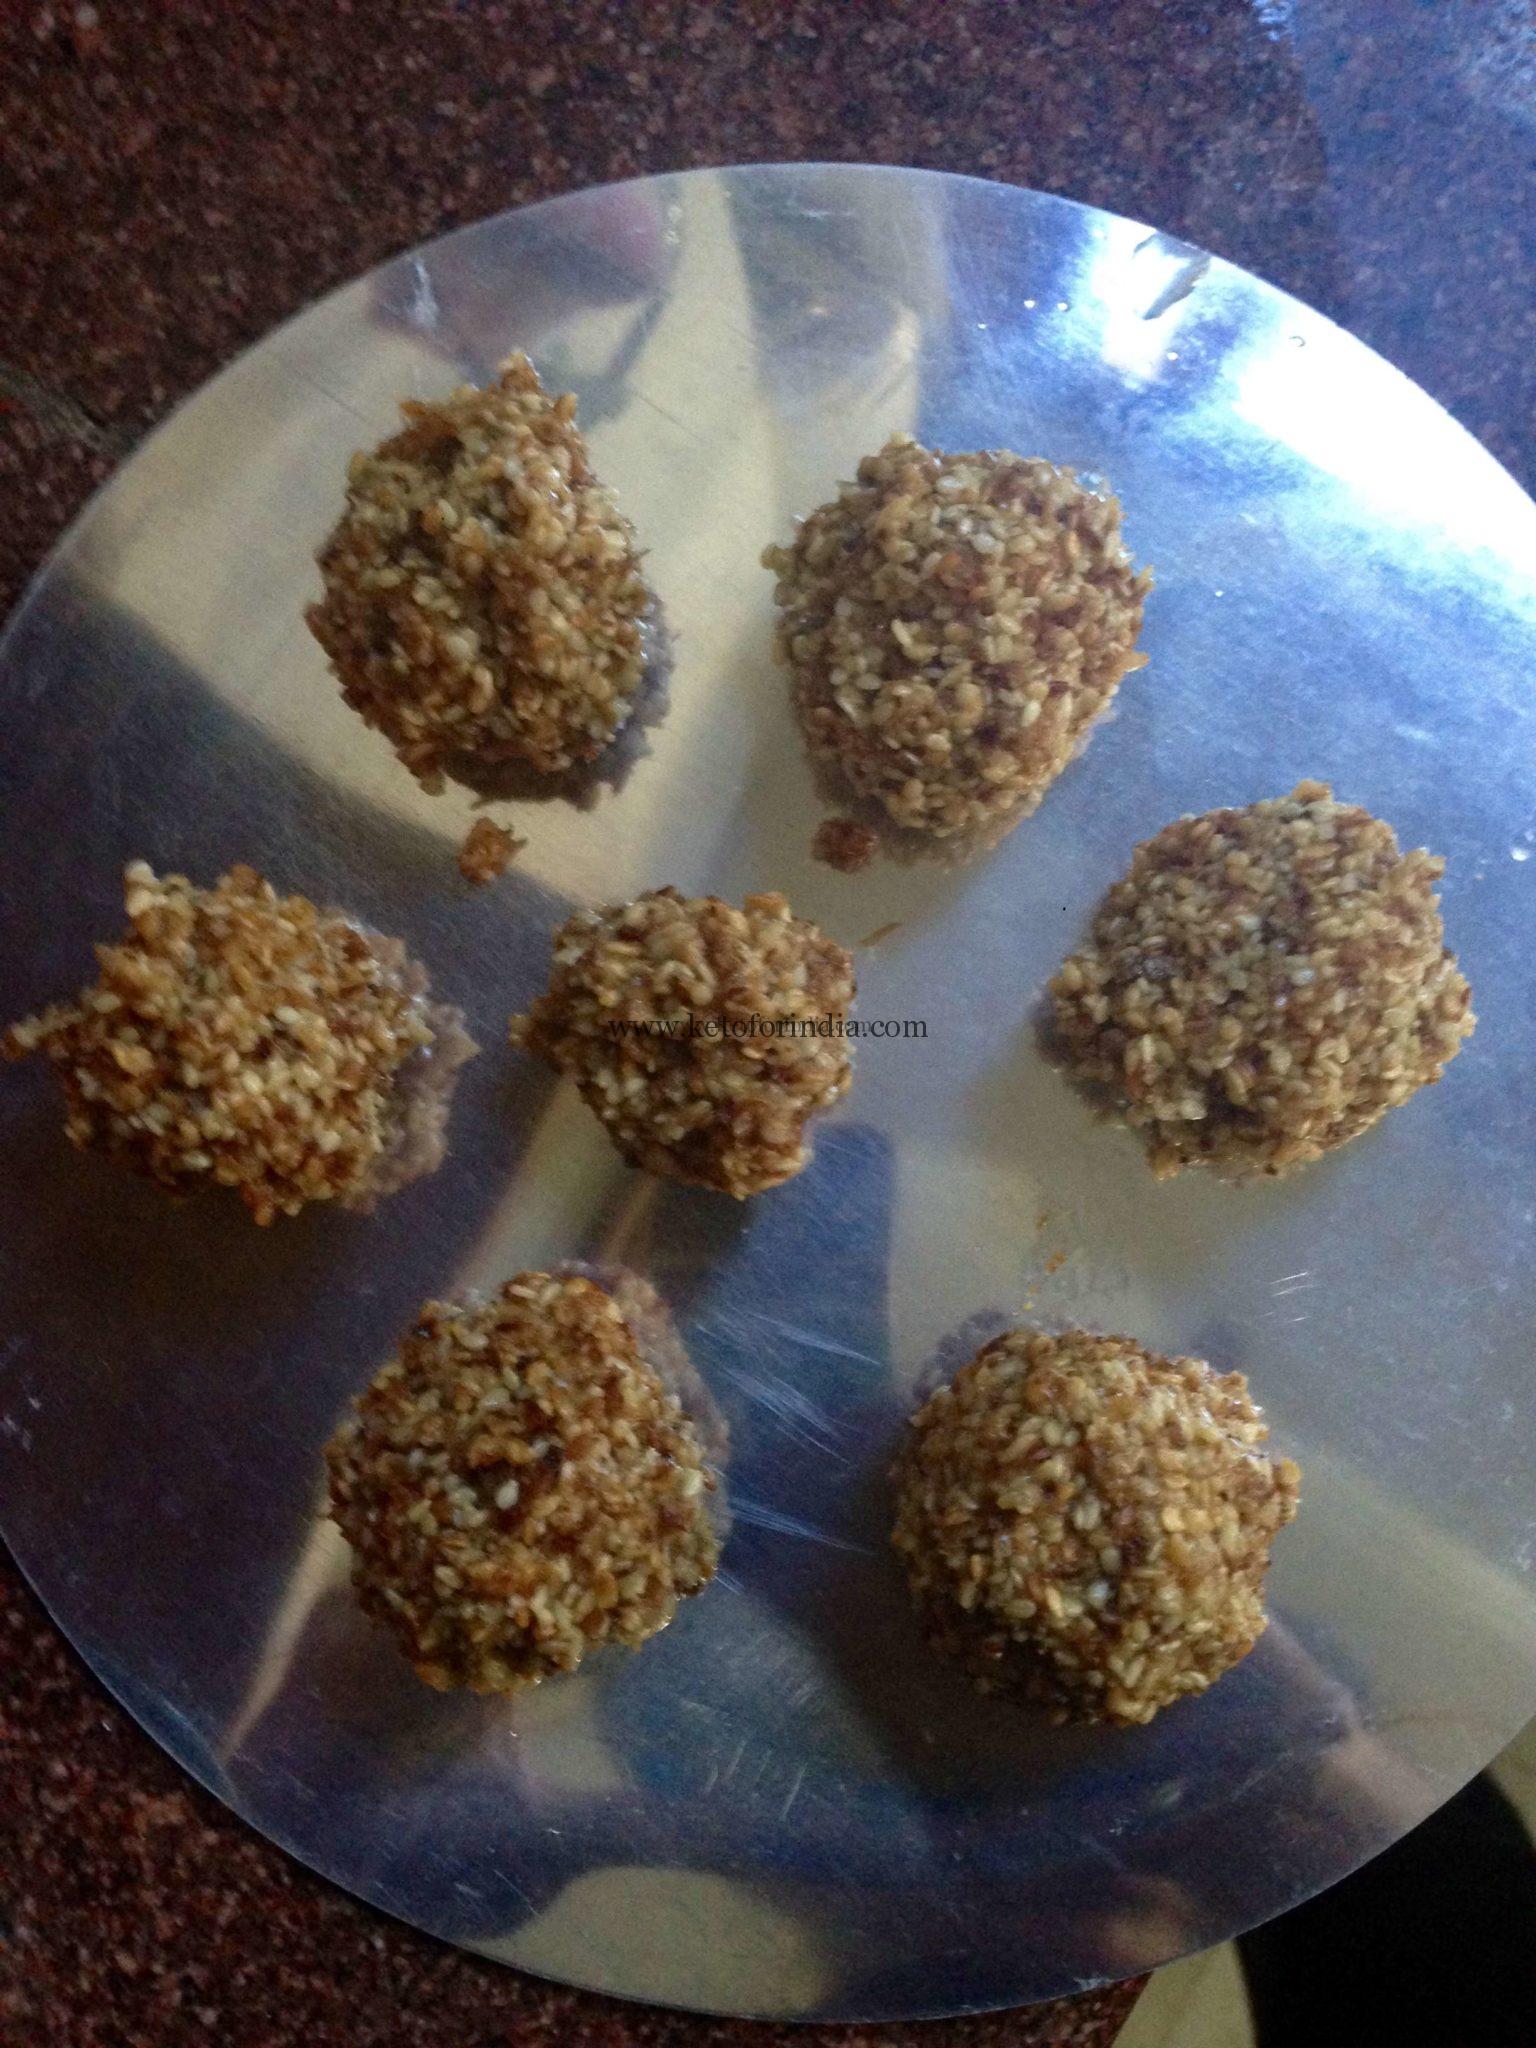 How to make sesame seed keto til laddoo for diwali